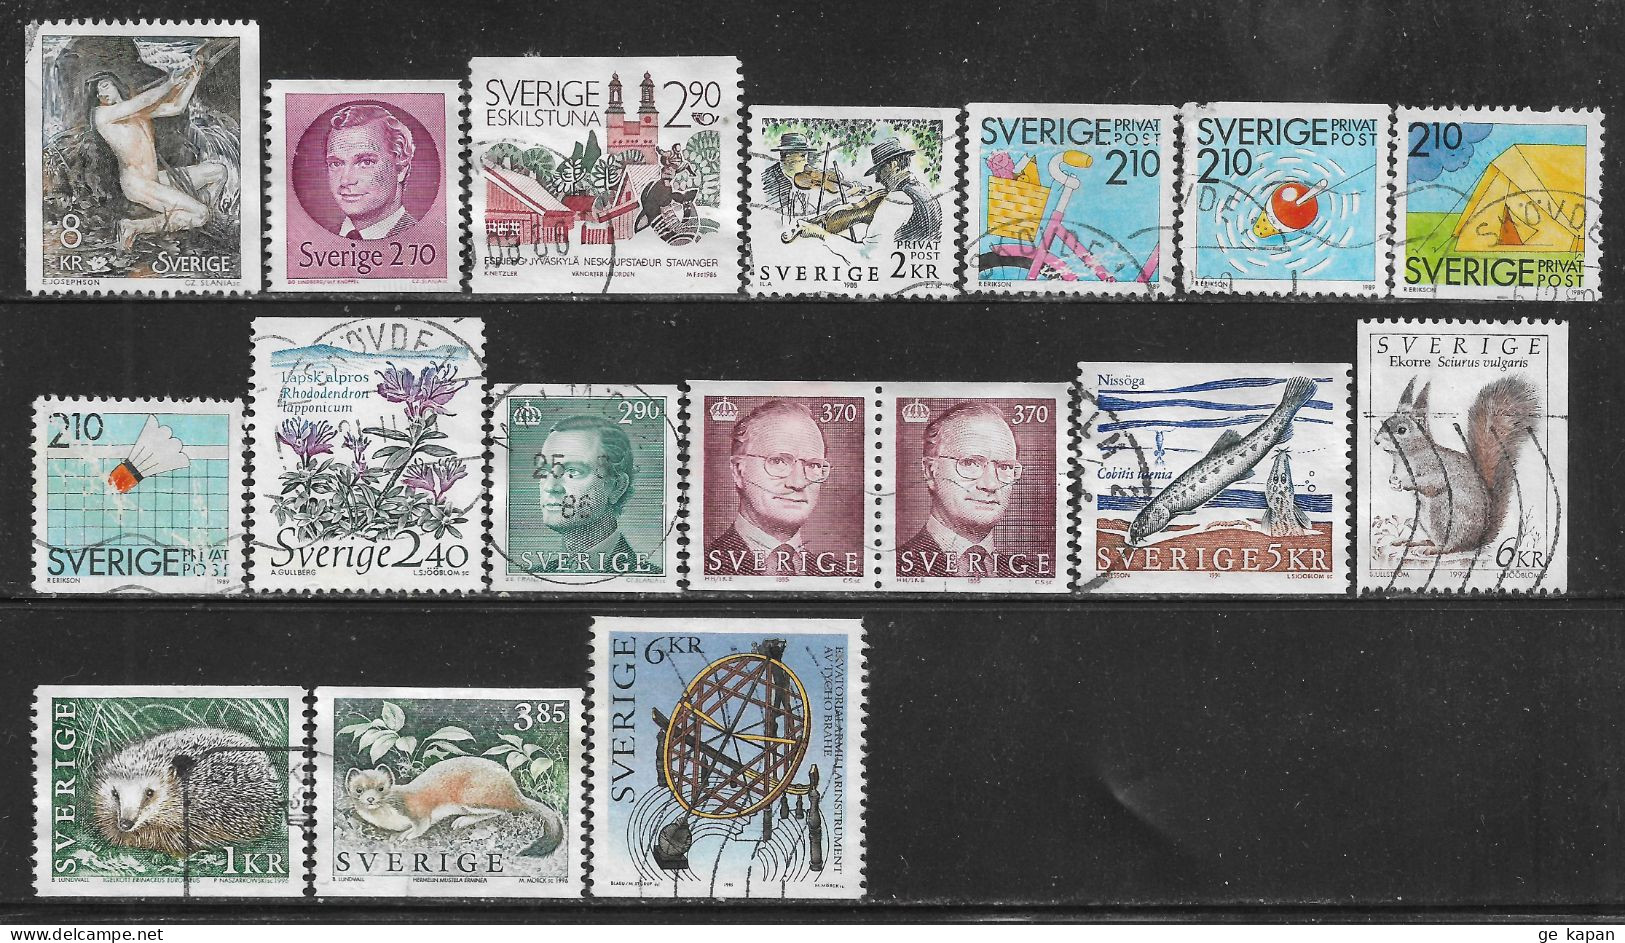 1980-96 SWEDEN 17 Used Stamps (Sc.# 1340,1372,1604,1685,1741,1743,1744,1746,1762,1785,1787,1869,1933,1926,1931) CV $7.95 - Usati